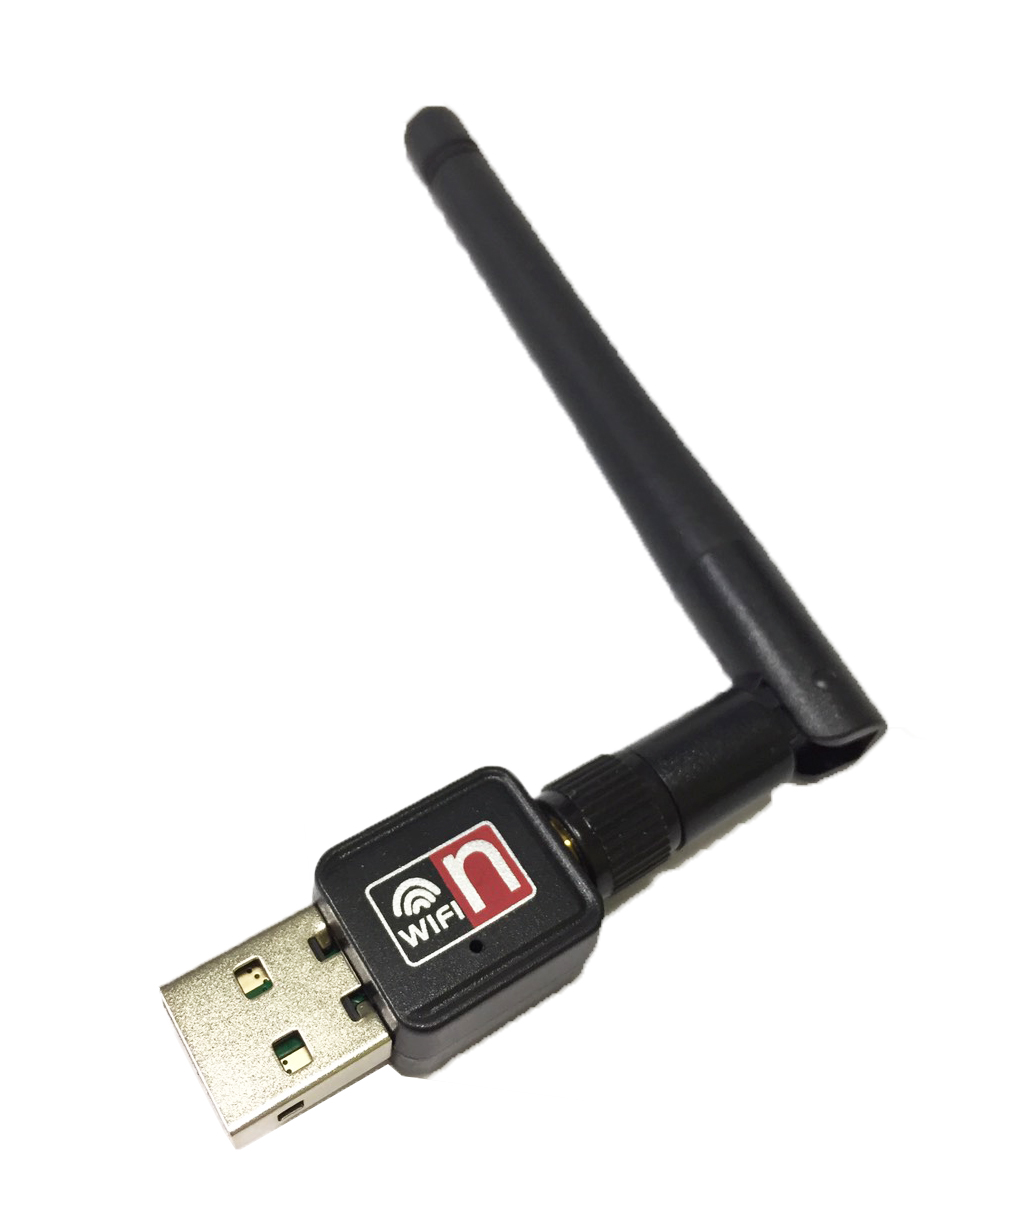 Wireless-N USB